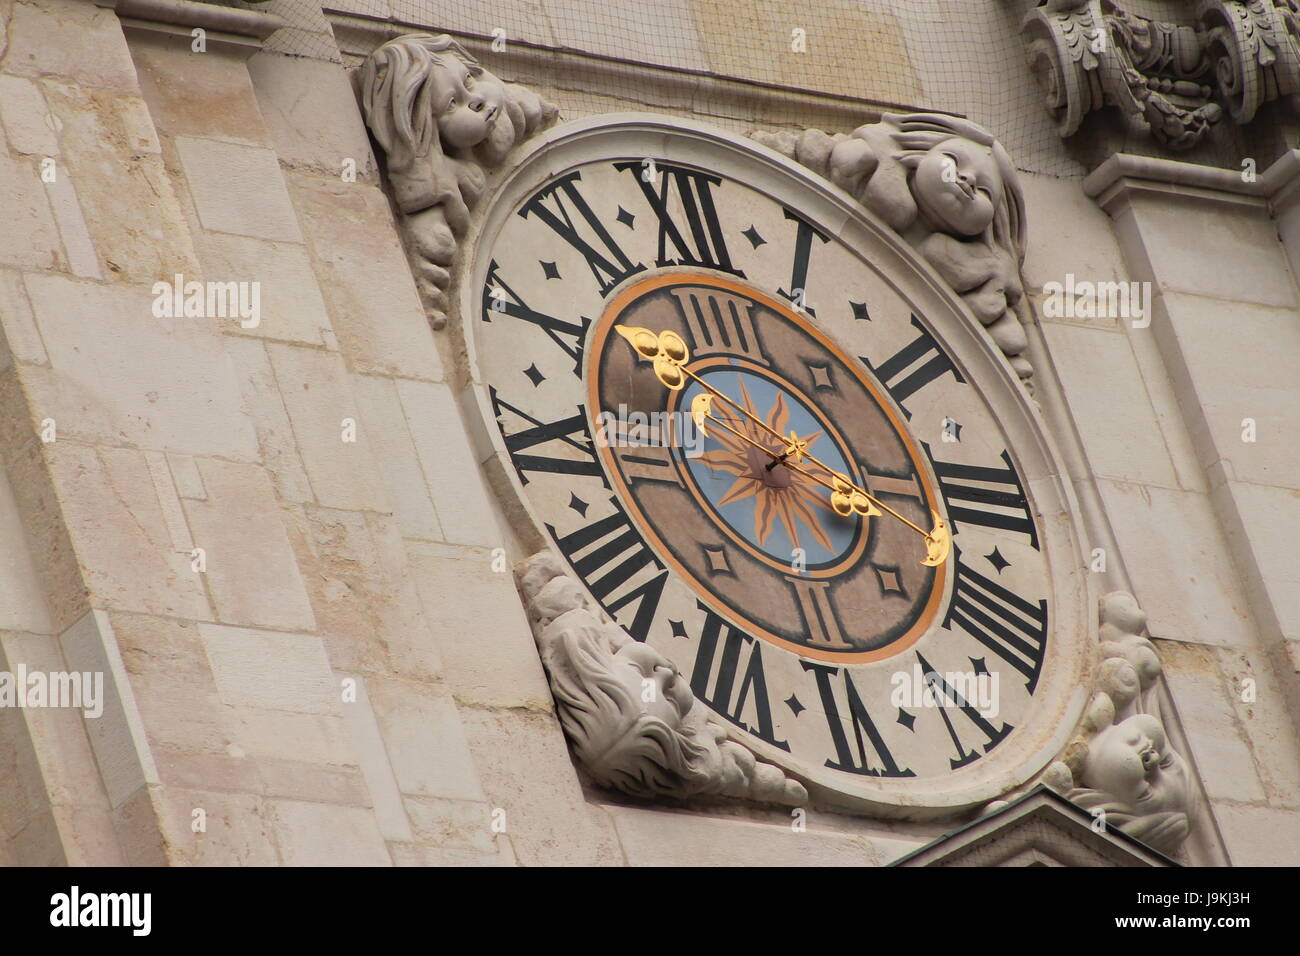 Turm, Barock, Uhr, Zeit, Uhrturm, Uhrzeiger, Mittelalter, Detail  Stockfotografie - Alamy